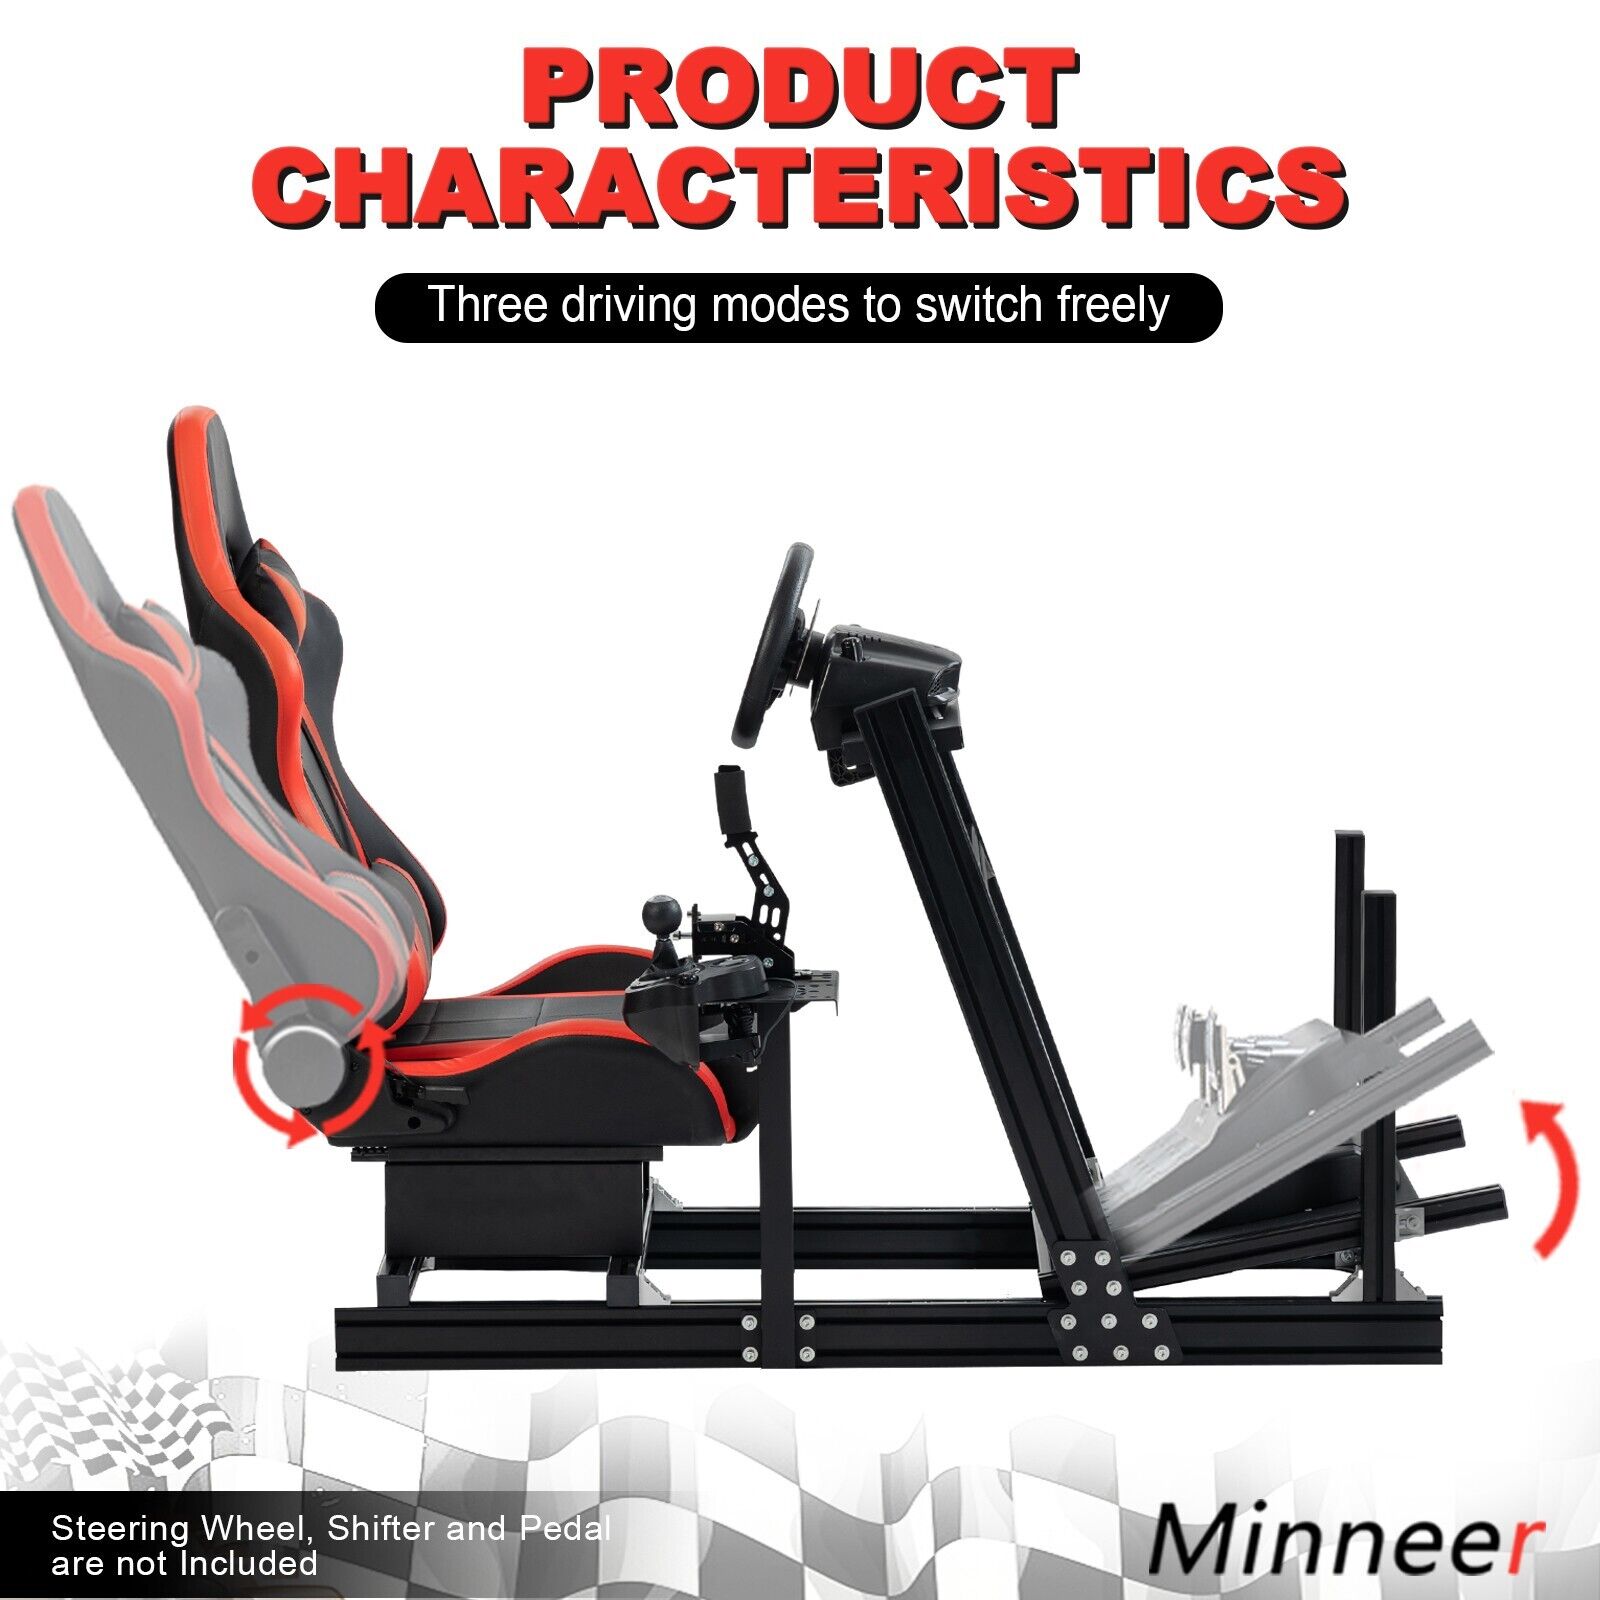 Minneer Aluminum Racing simulator Cockpit with Seat & Monitor Stand Fit Logitech Fanatec CSL-DD